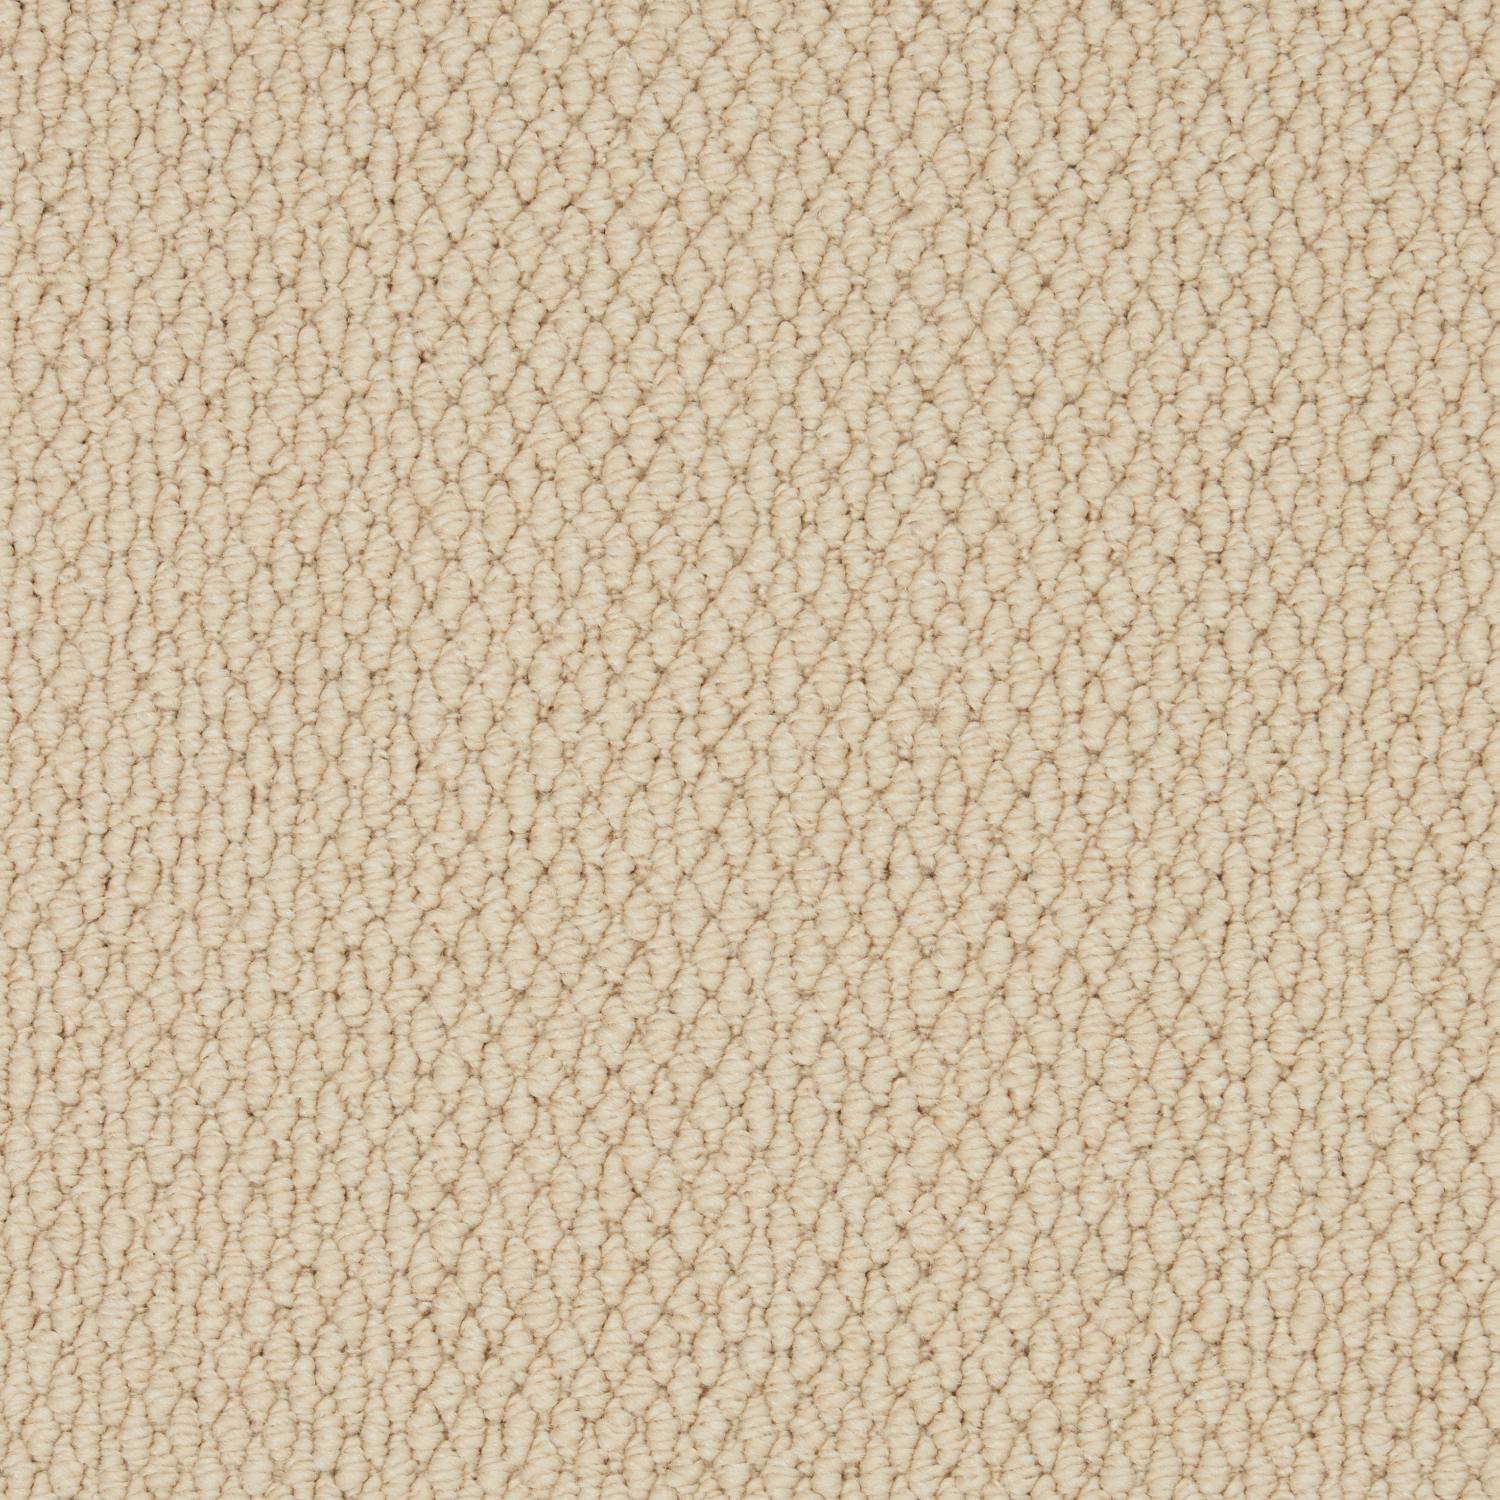 Rural Textures Loop Carpet - Ground Spice Weave